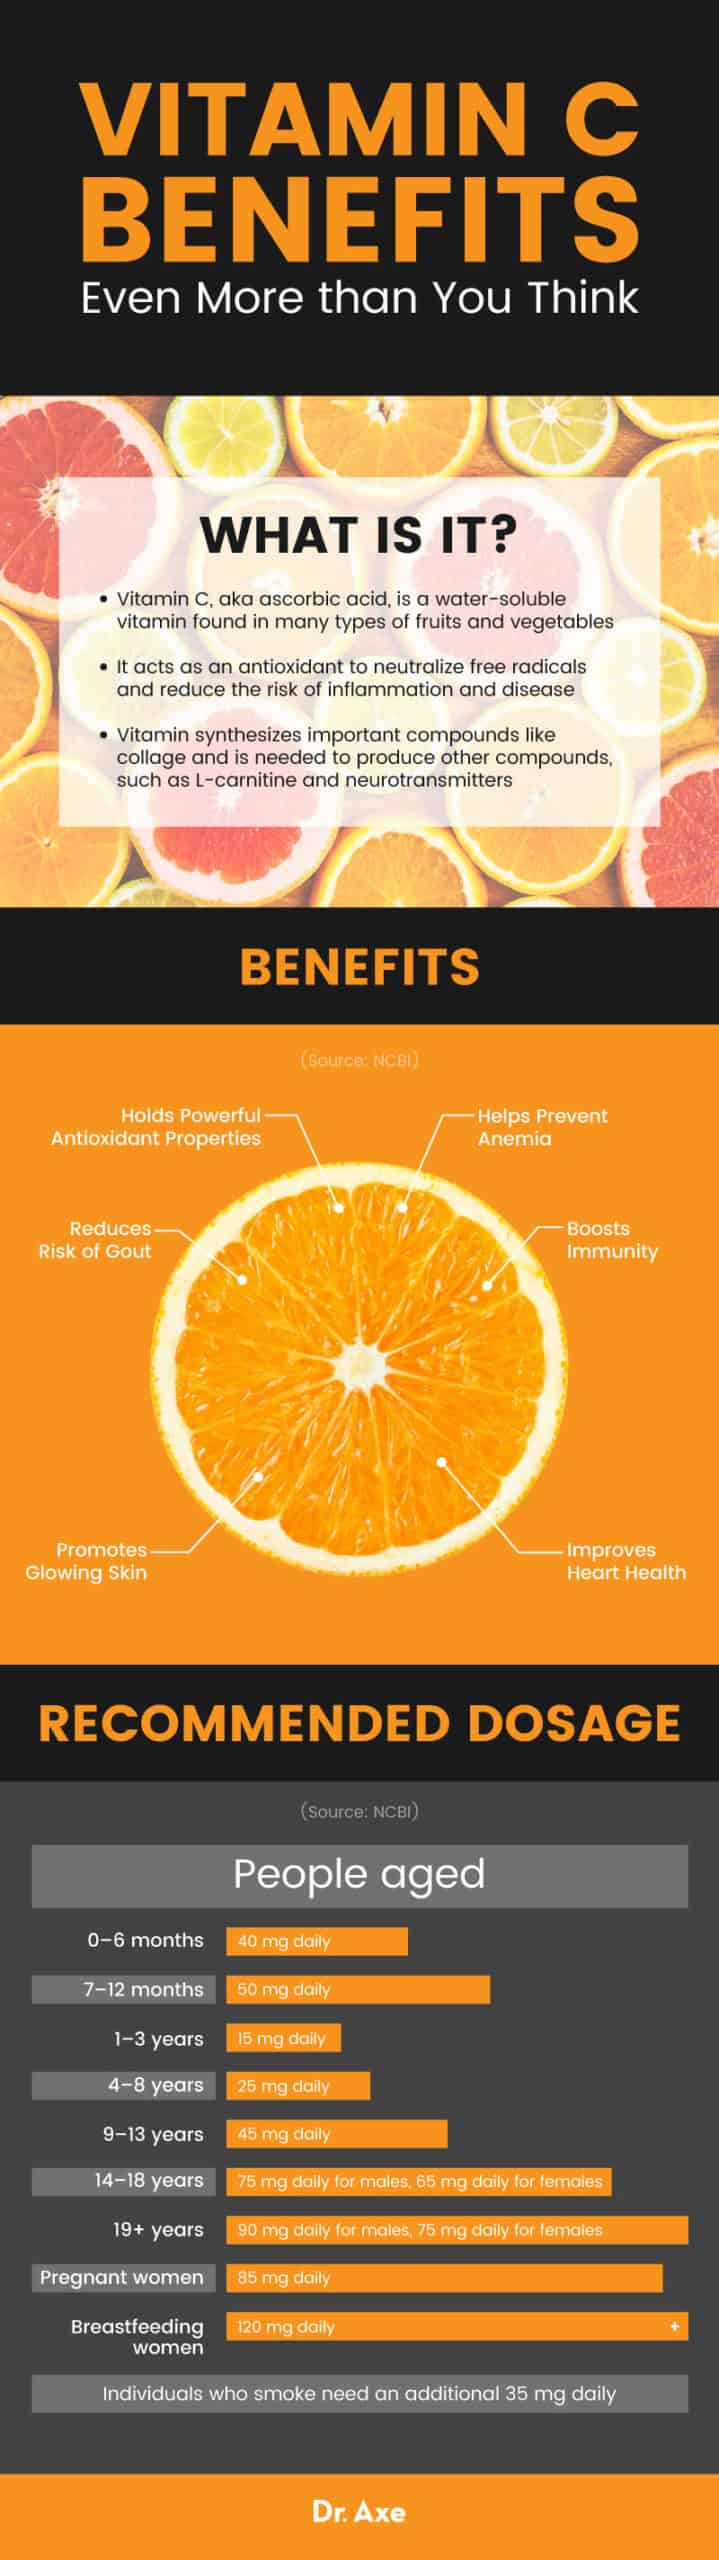 Vitamin C benefits - Dr. Axe